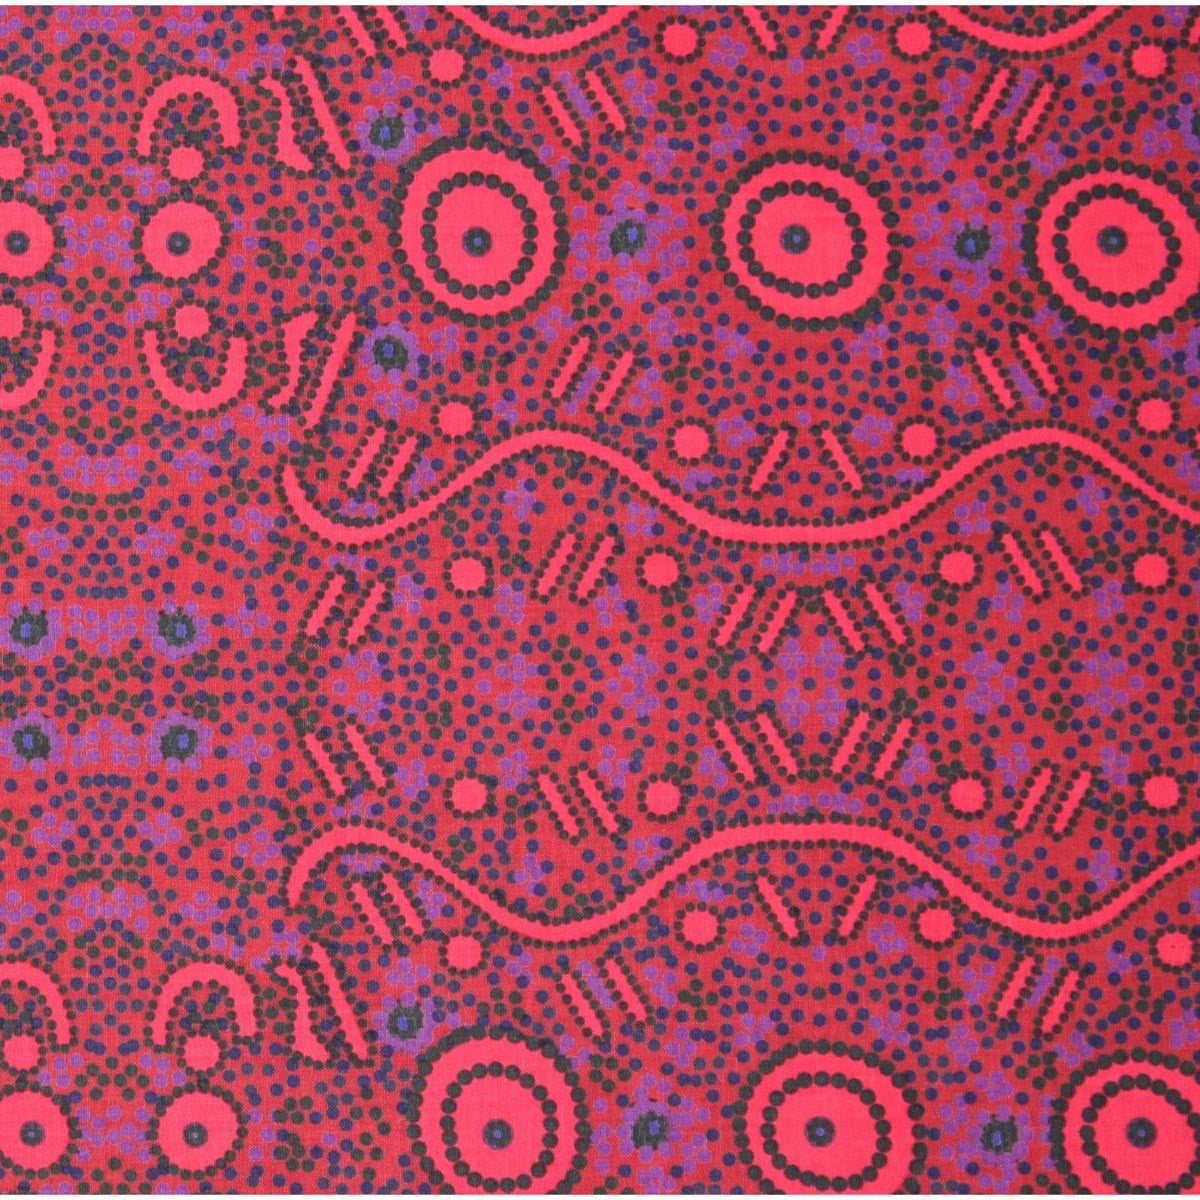 WATER DREAMING RED by Australian Aboriginal Artist A. NAPANANGKA